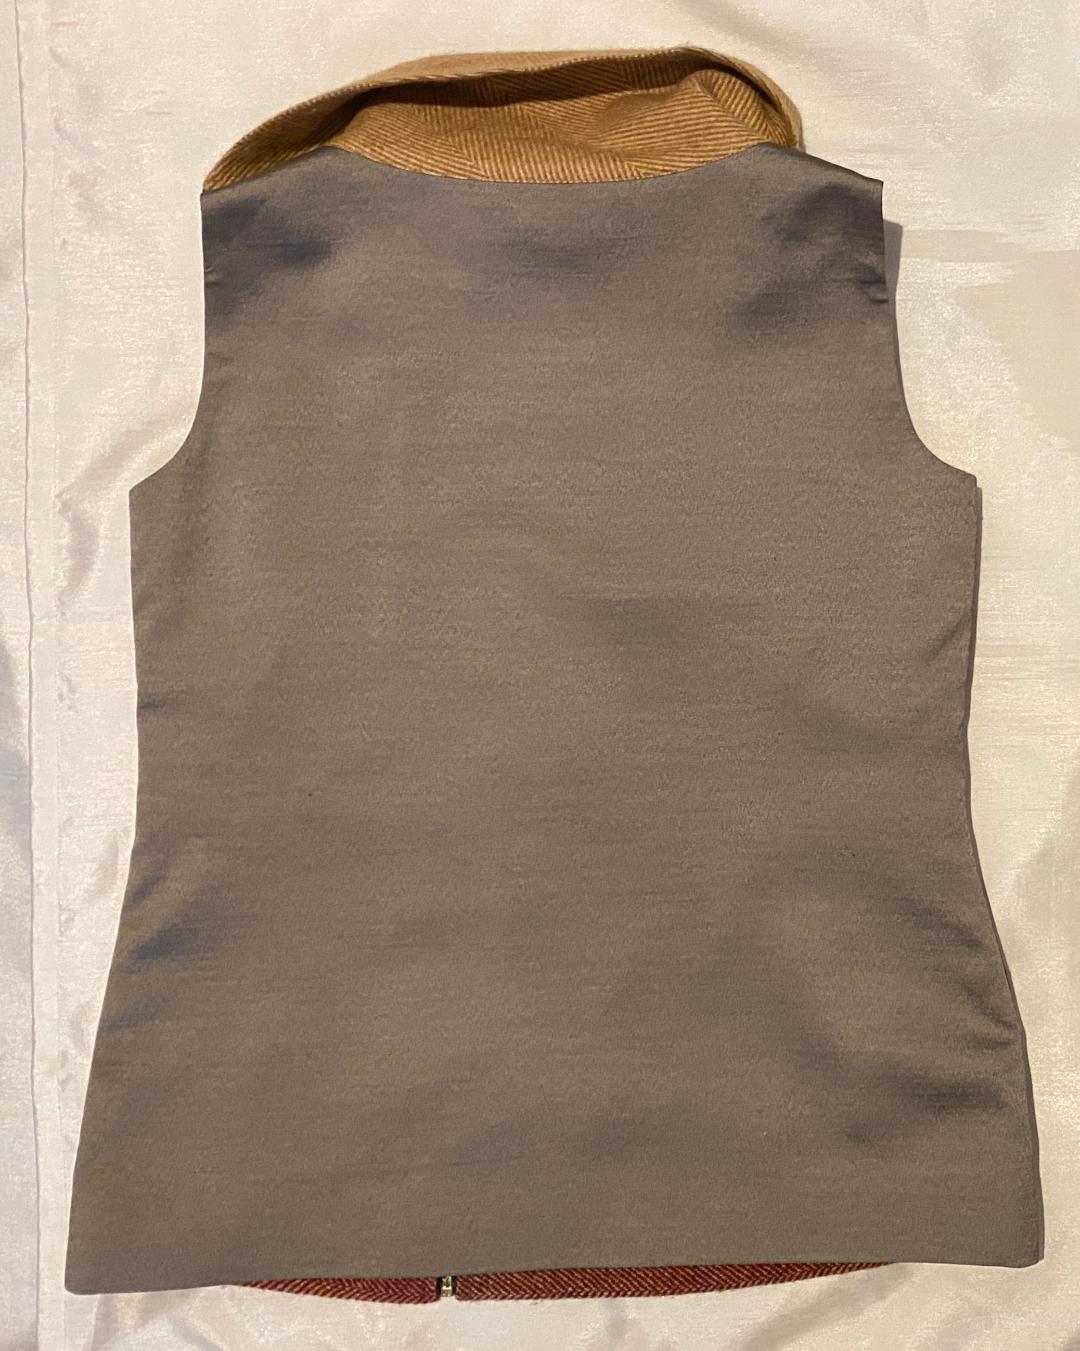 Dahlia Vest. Tweed w Cashmere Neck and Belt - Tan & Pink